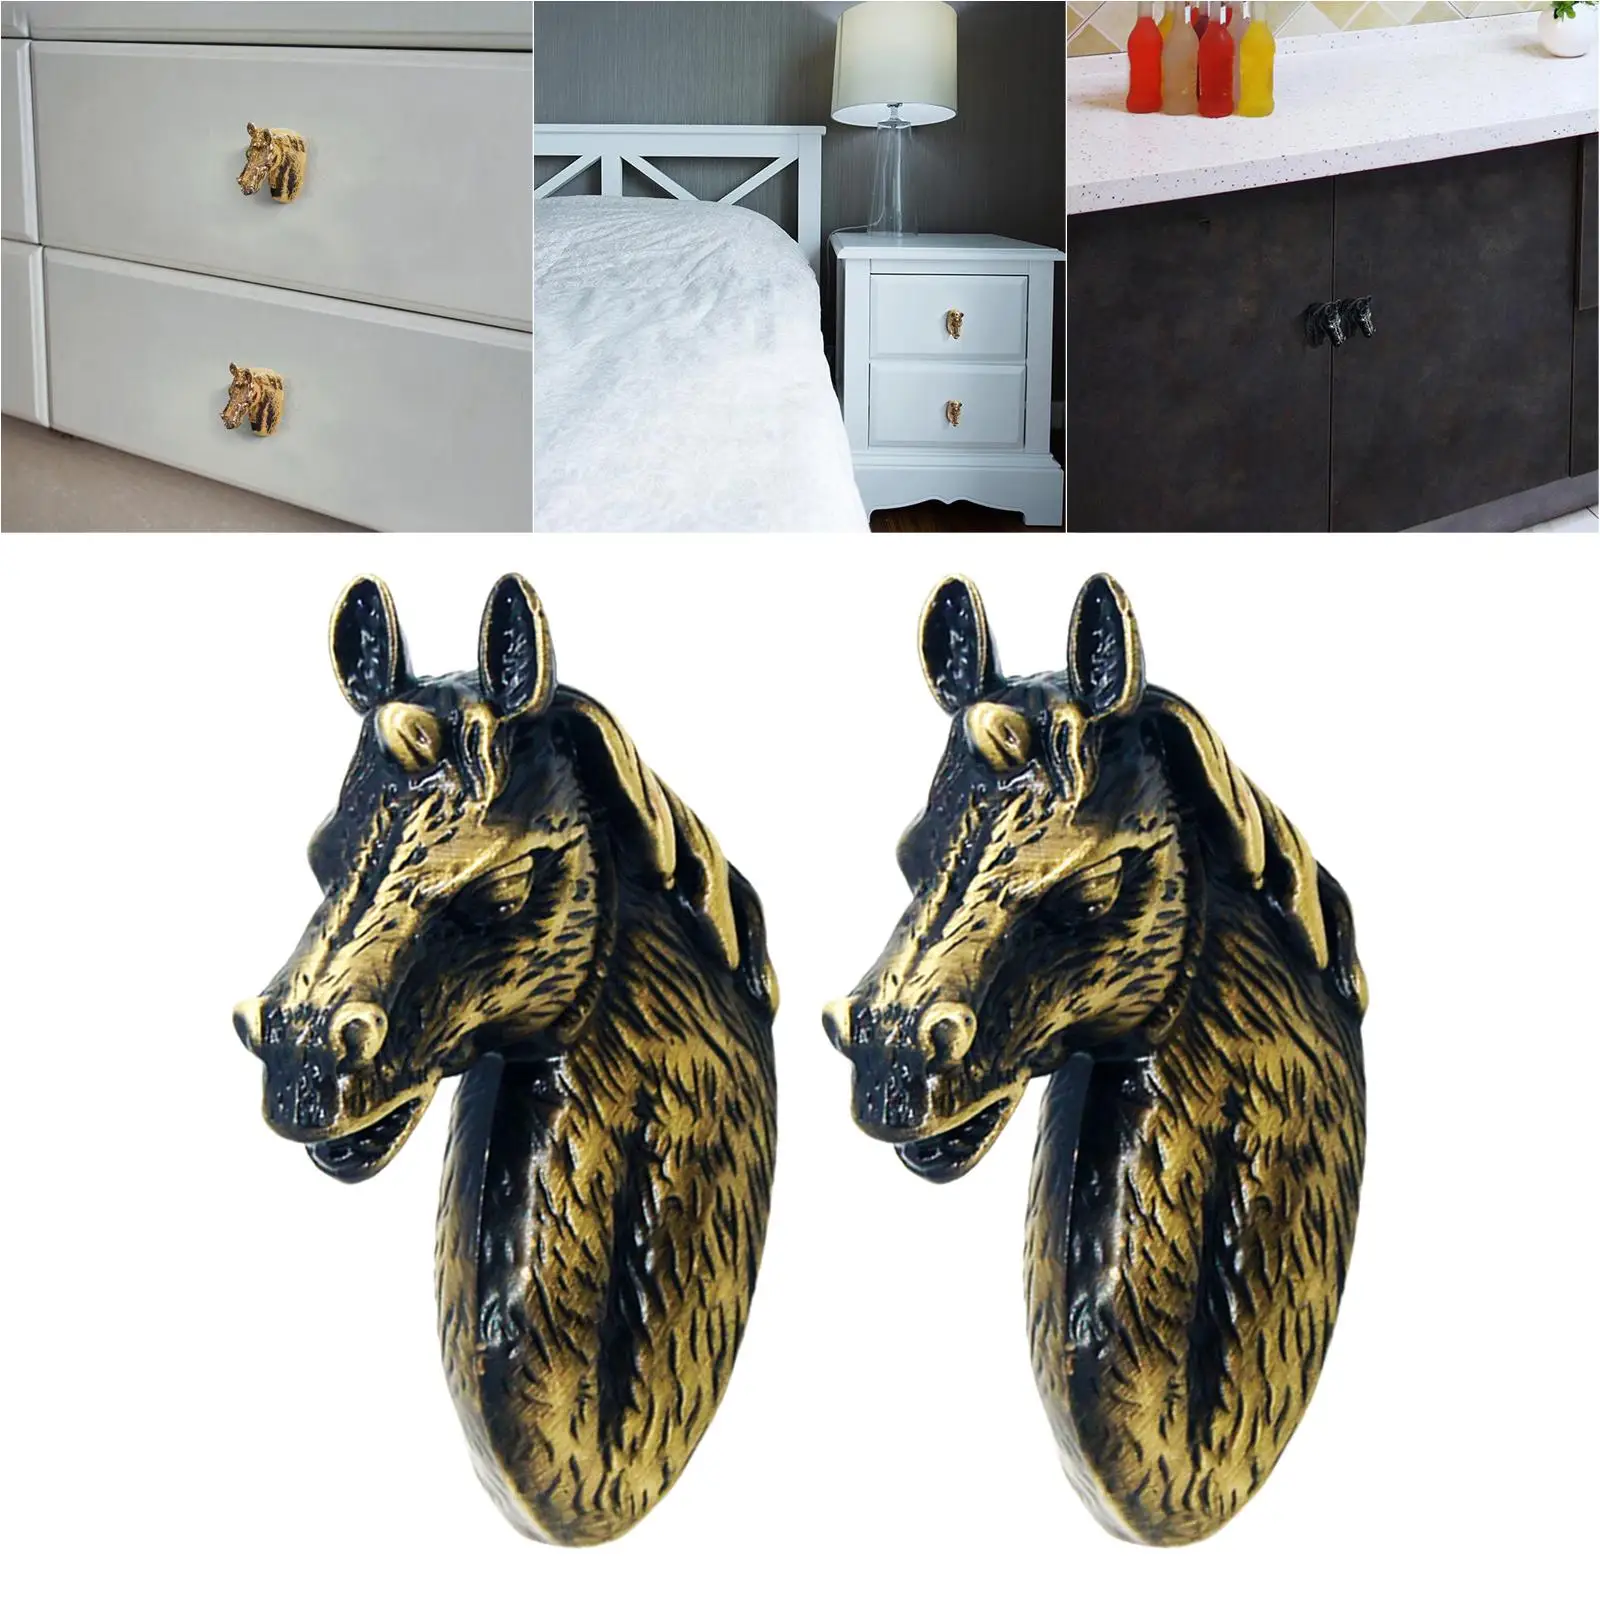 Vintage Horse Knobs Cupboard Cabinet Drawer Pull Handles Decor